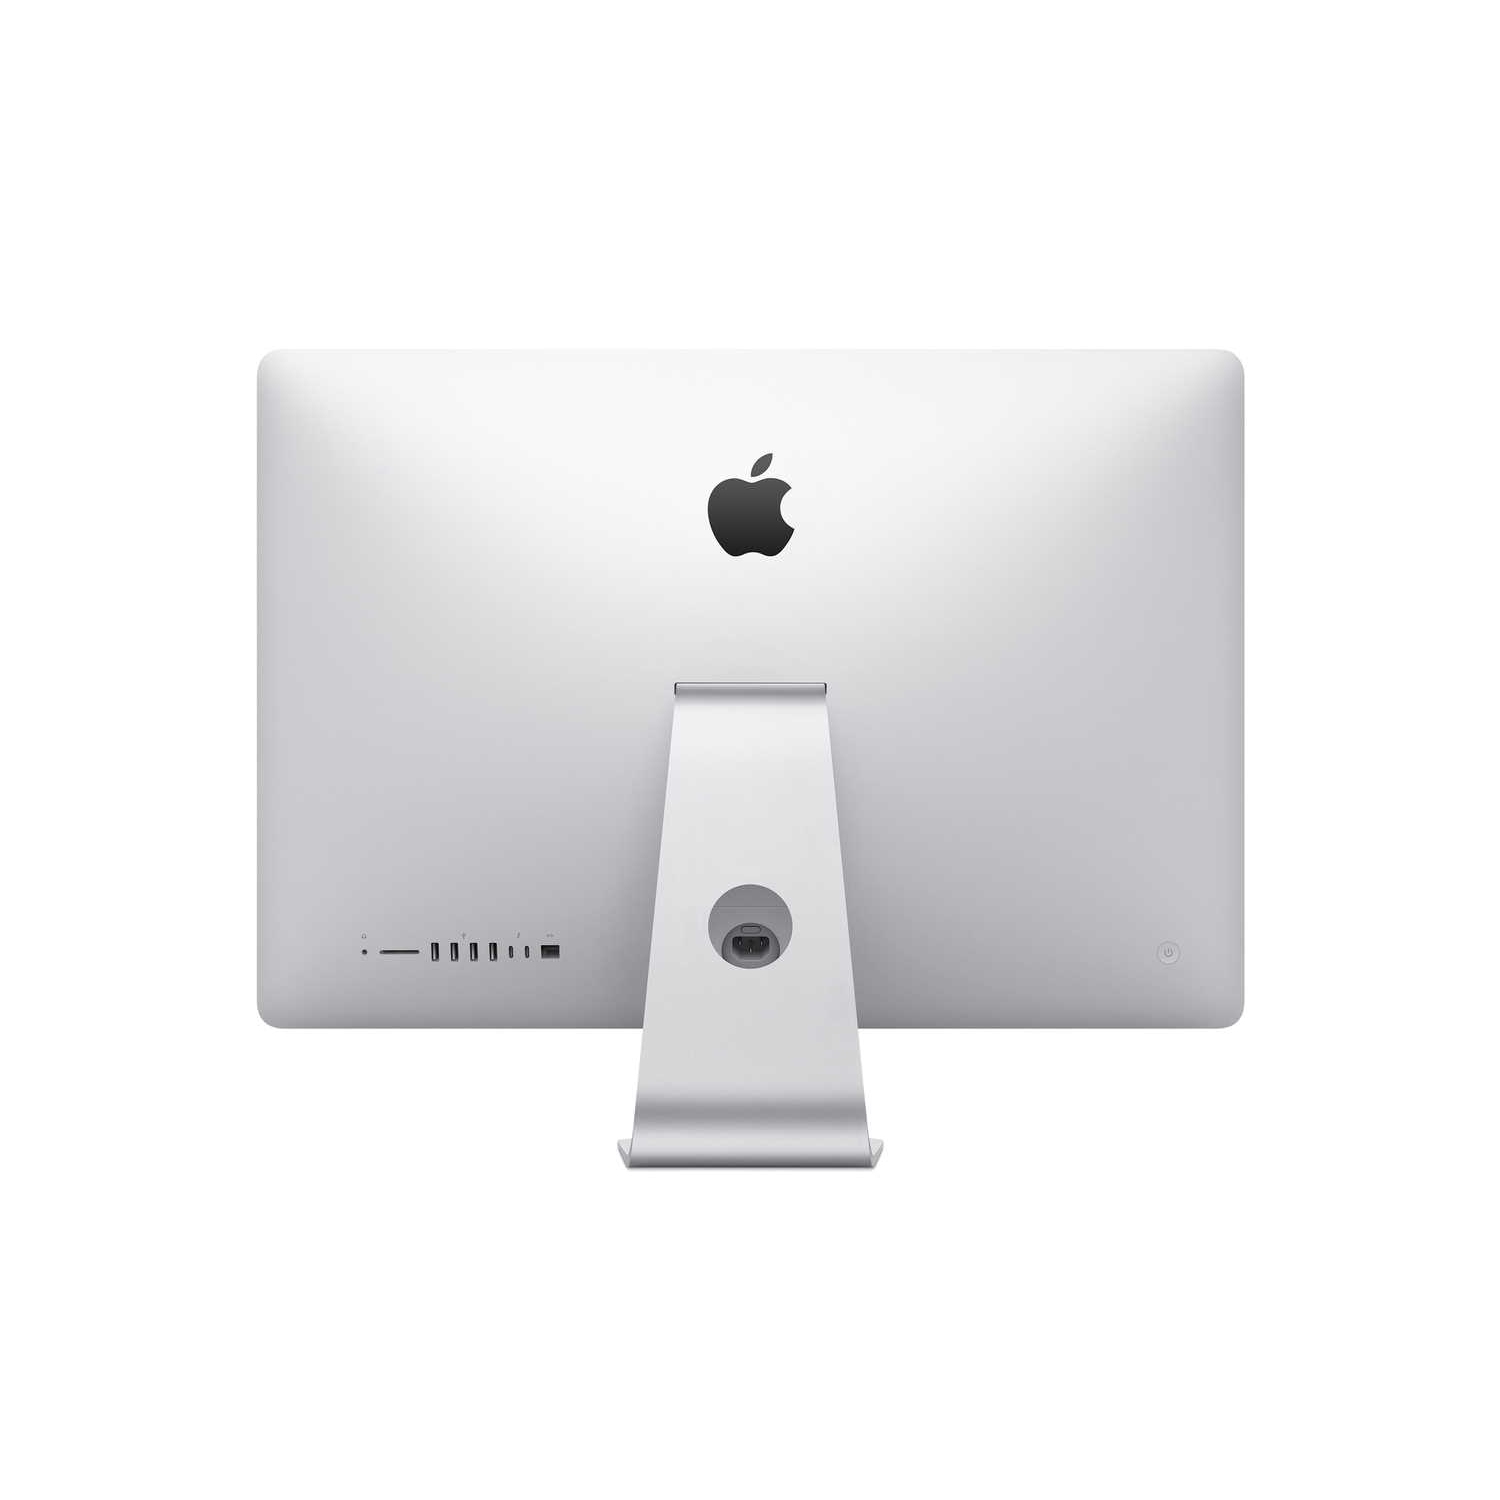 (Refurbished - Excellent) iMac 27-inch (Retina 5K) 3.0GHZ 6-Core i5 (2019)  MRQY2LL/A 8 GB 1 TB Fusion HDD 5120 x 2880 Display Mac OS Keyboard and 